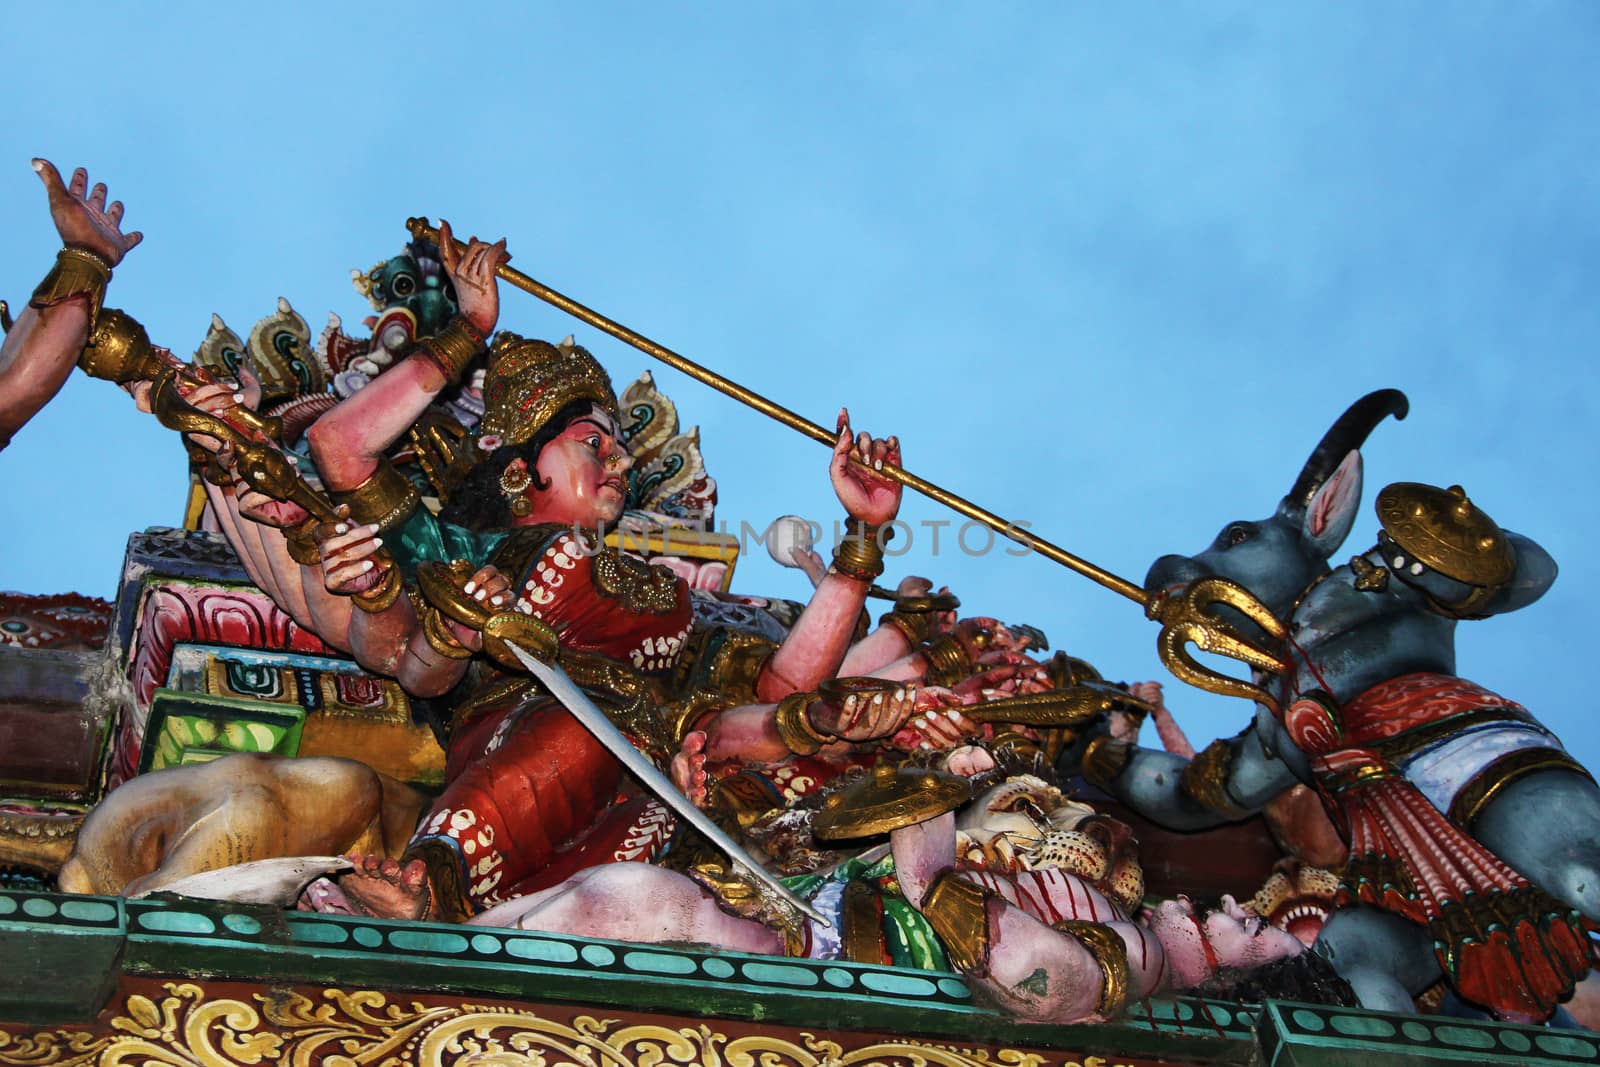 An intricate battle scene decoration of the Shree Lakshminarayan Hindu temple in Singapore